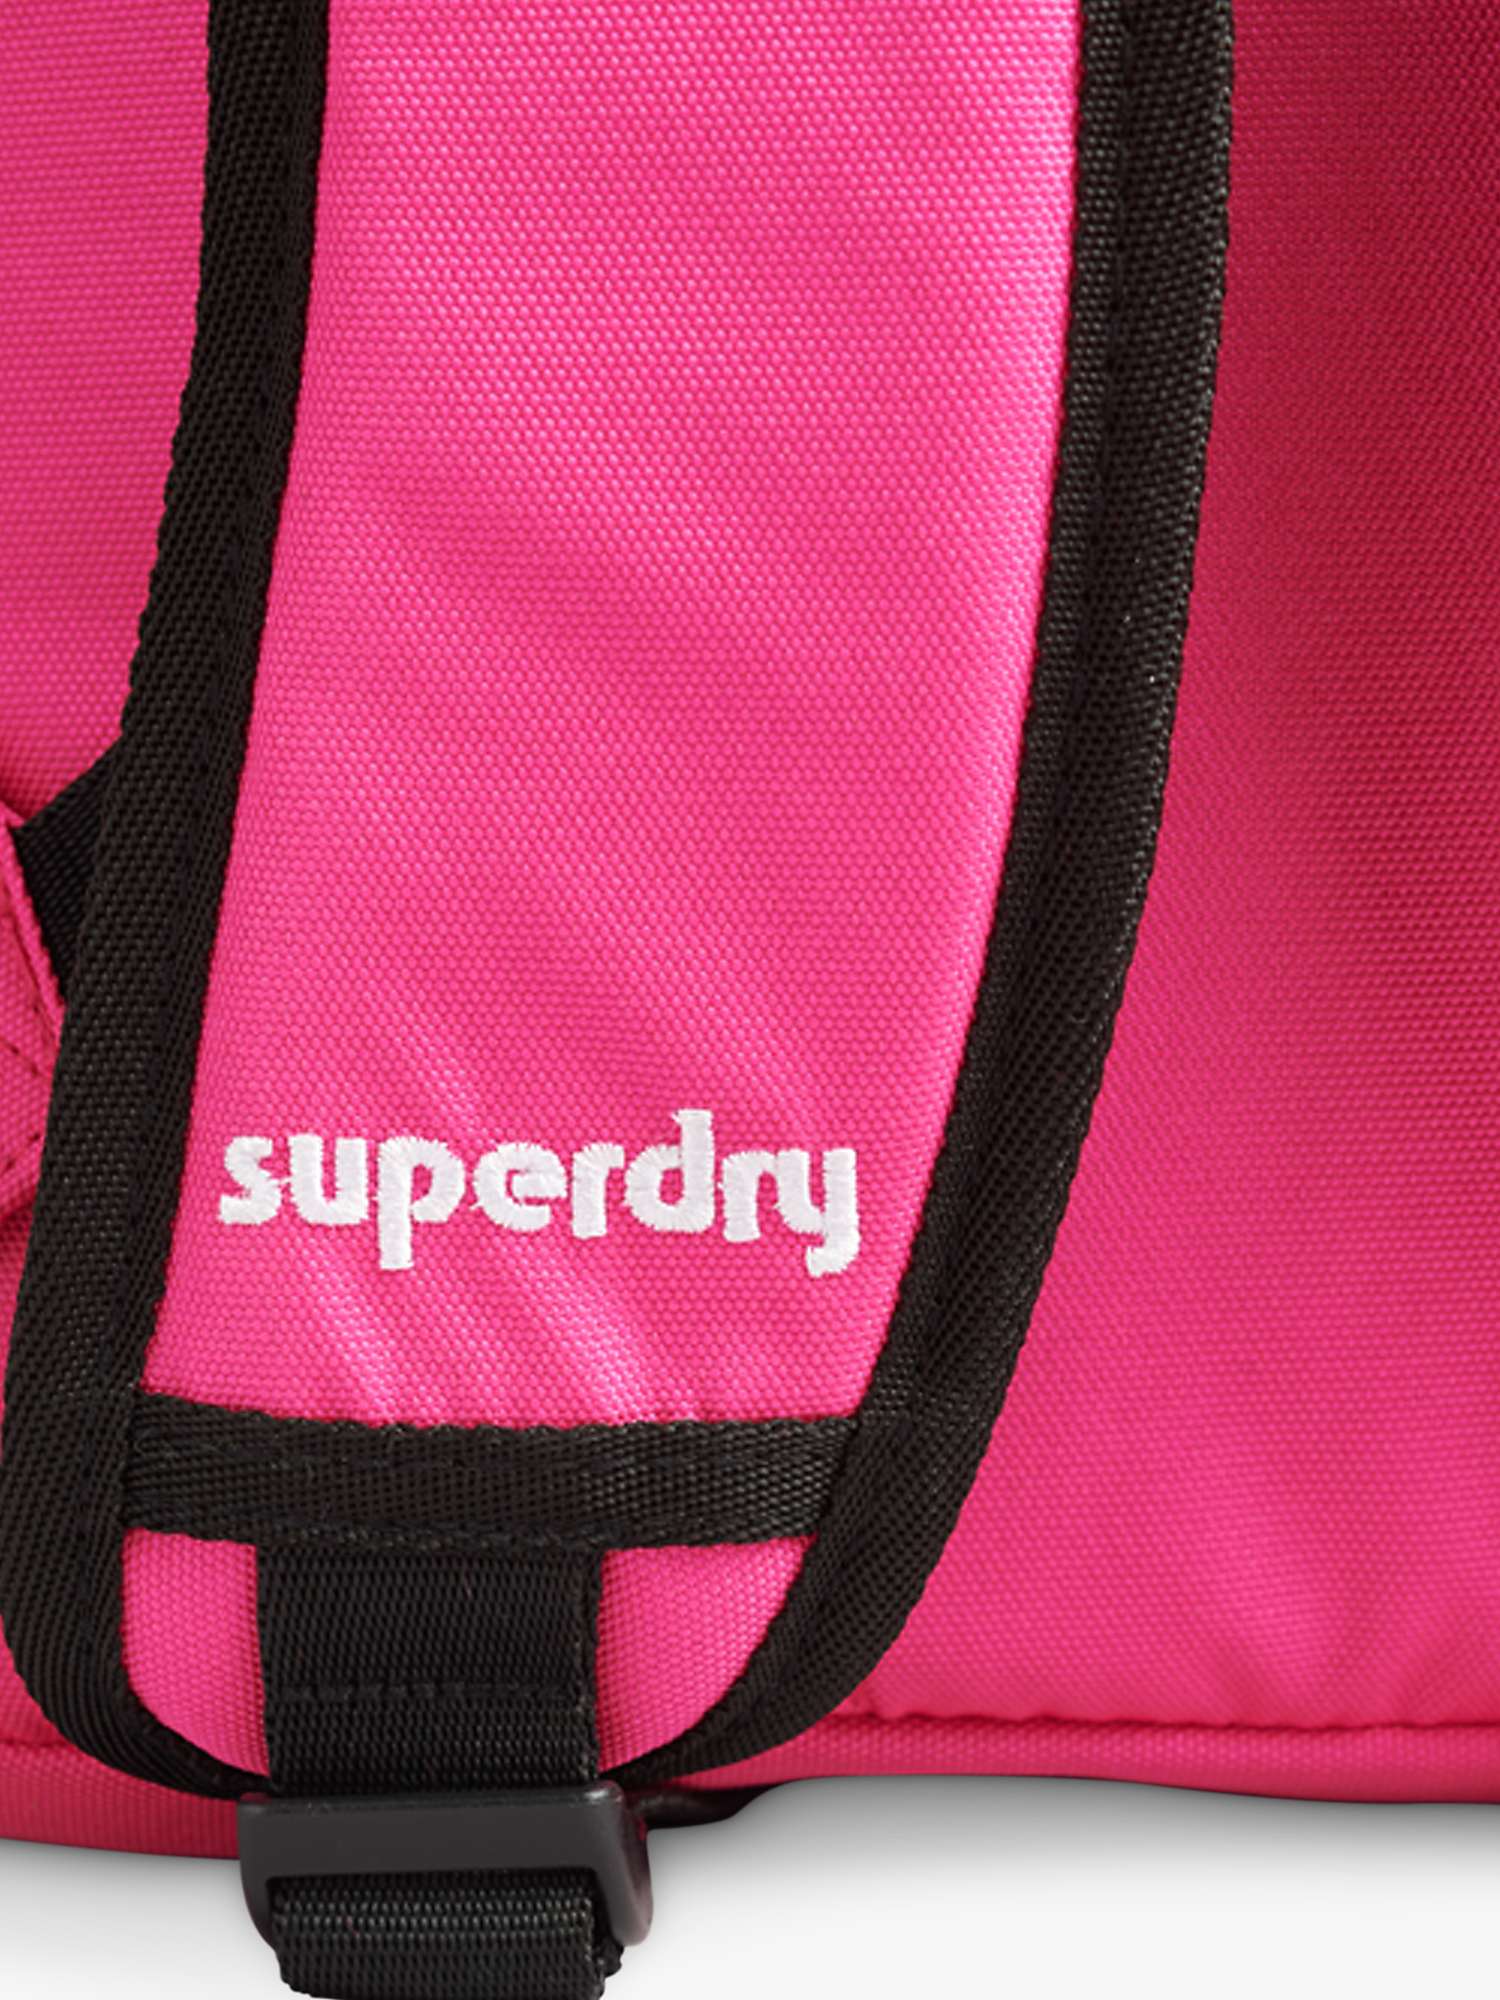 Buy Superdry Top Handle Backpack Online at johnlewis.com